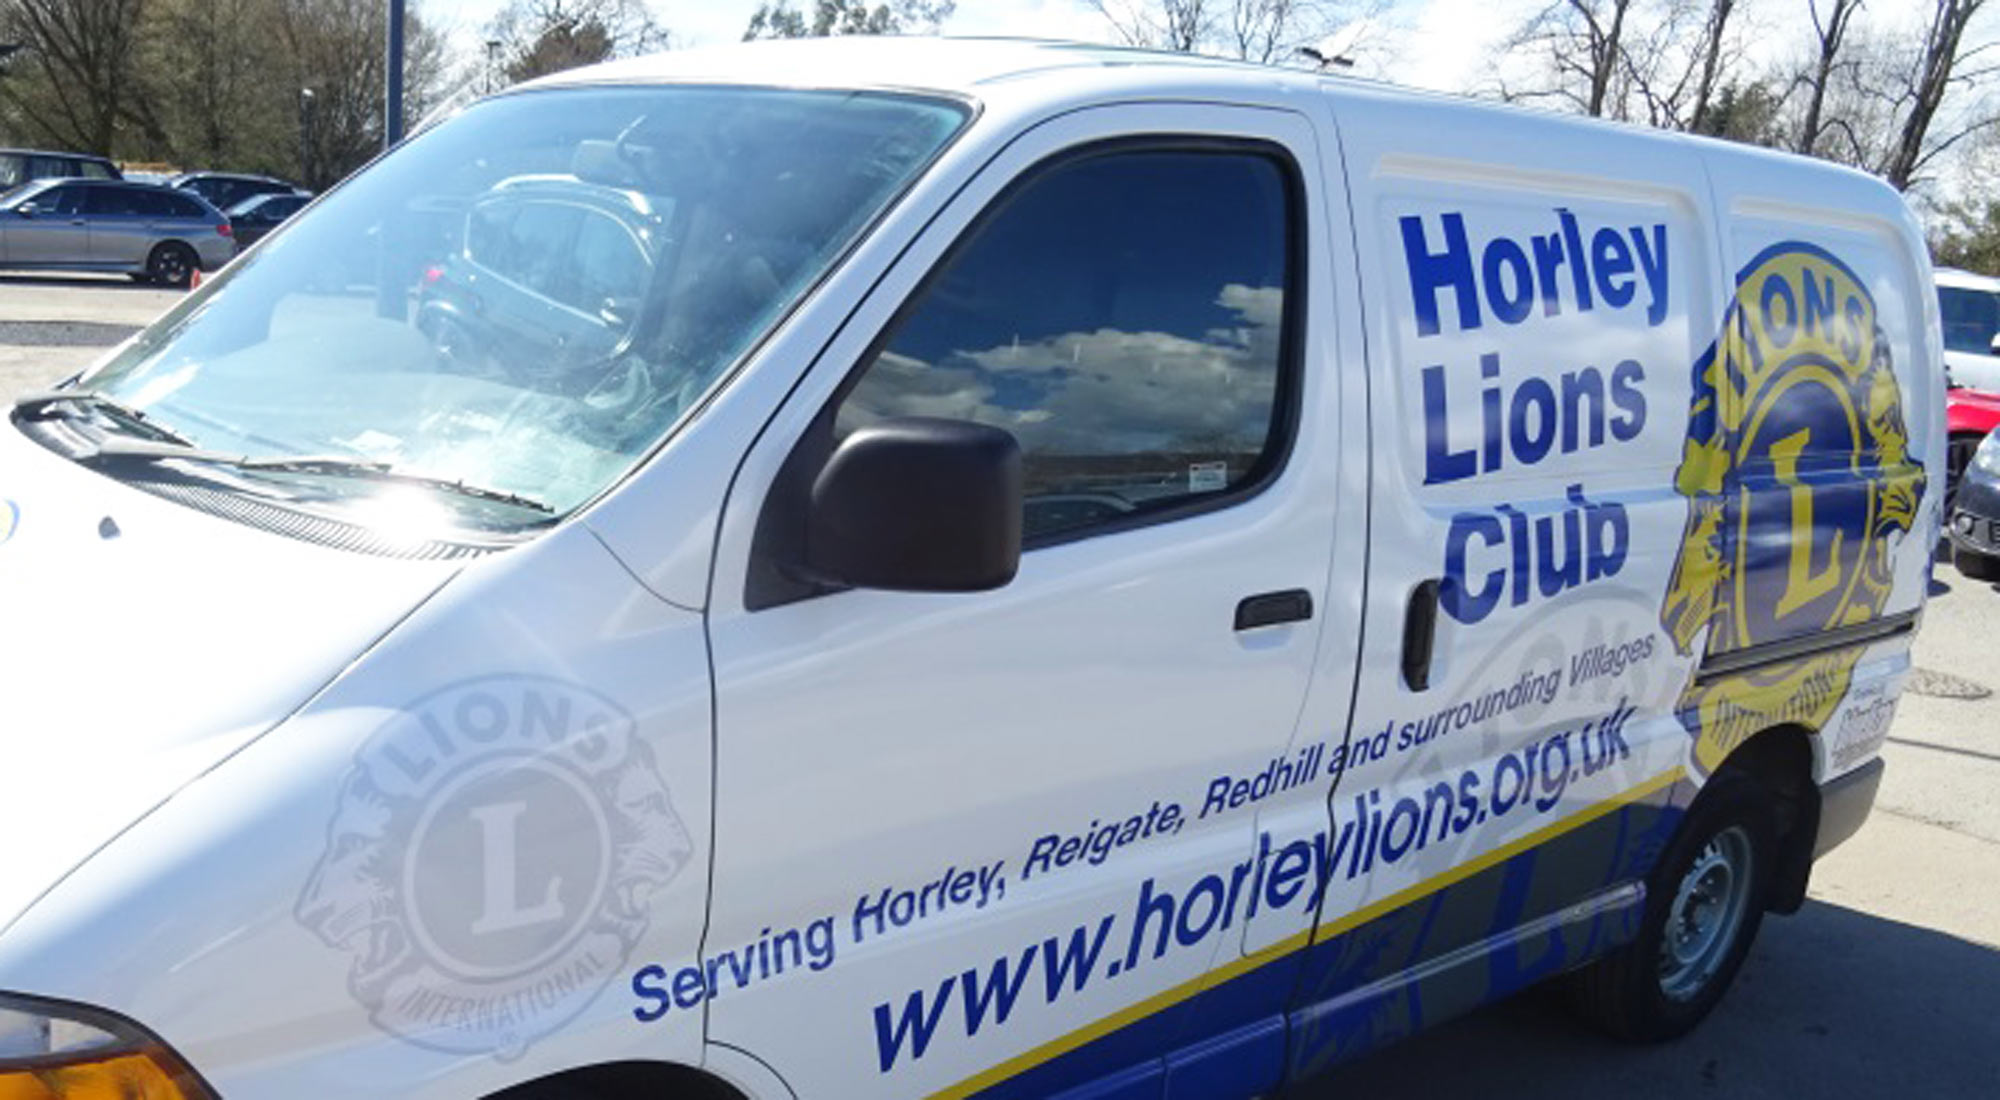 Horley Lions